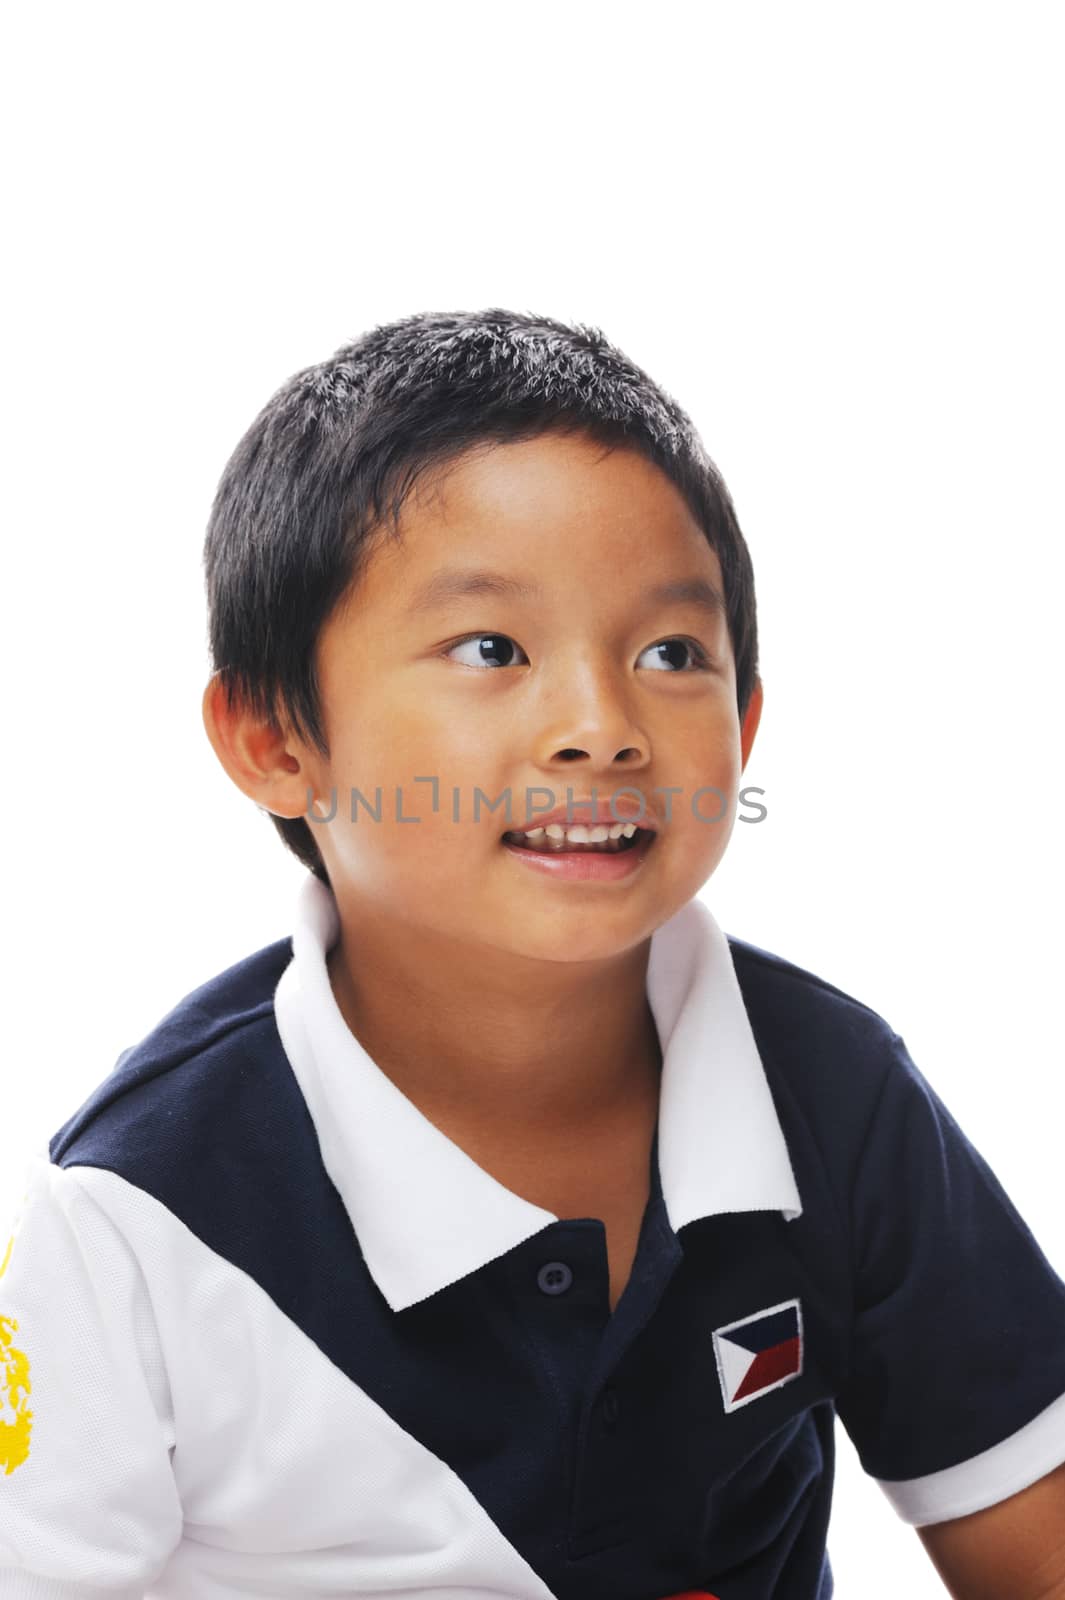 Filipino boy happy by kmwphotography